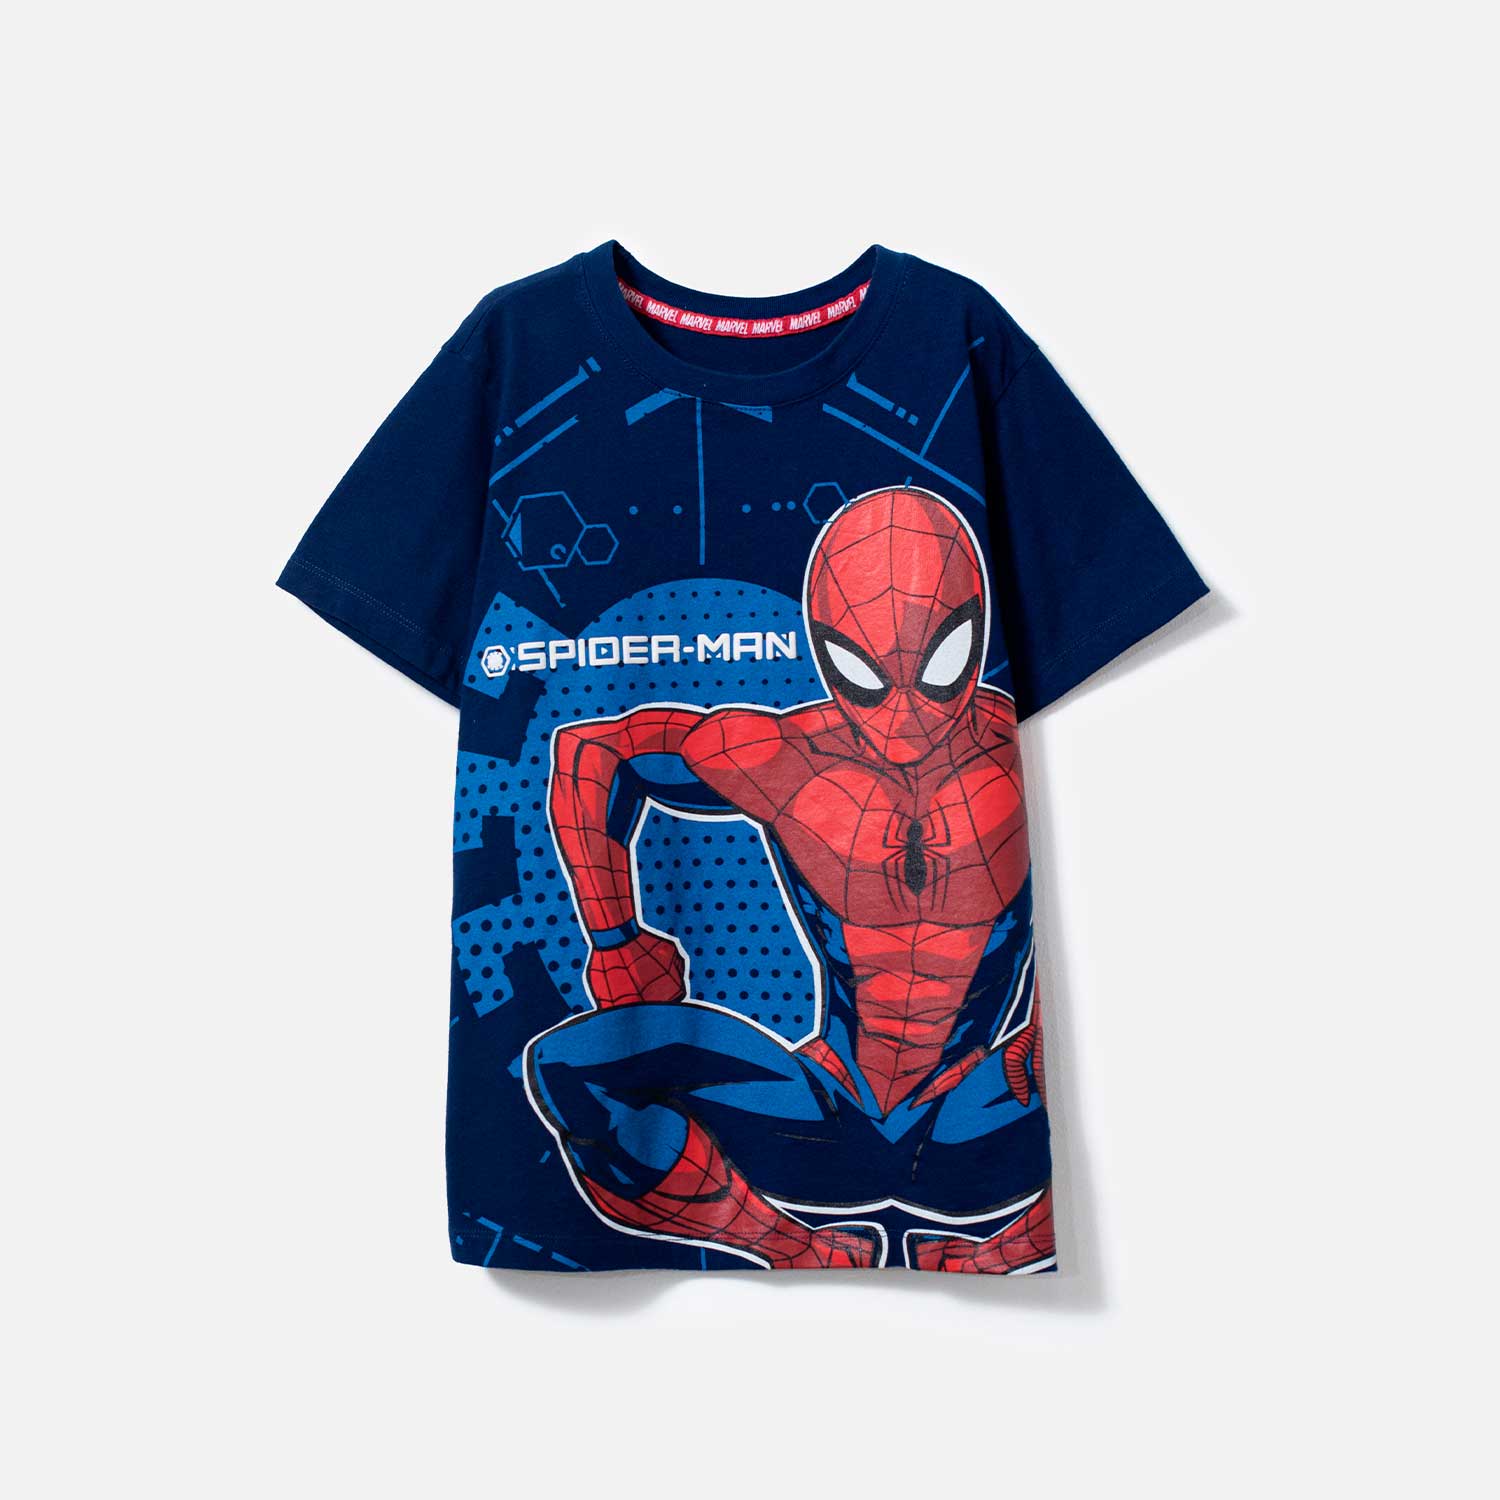 Camiseta de SpiderMan azul para niño - Tienda Online MIC